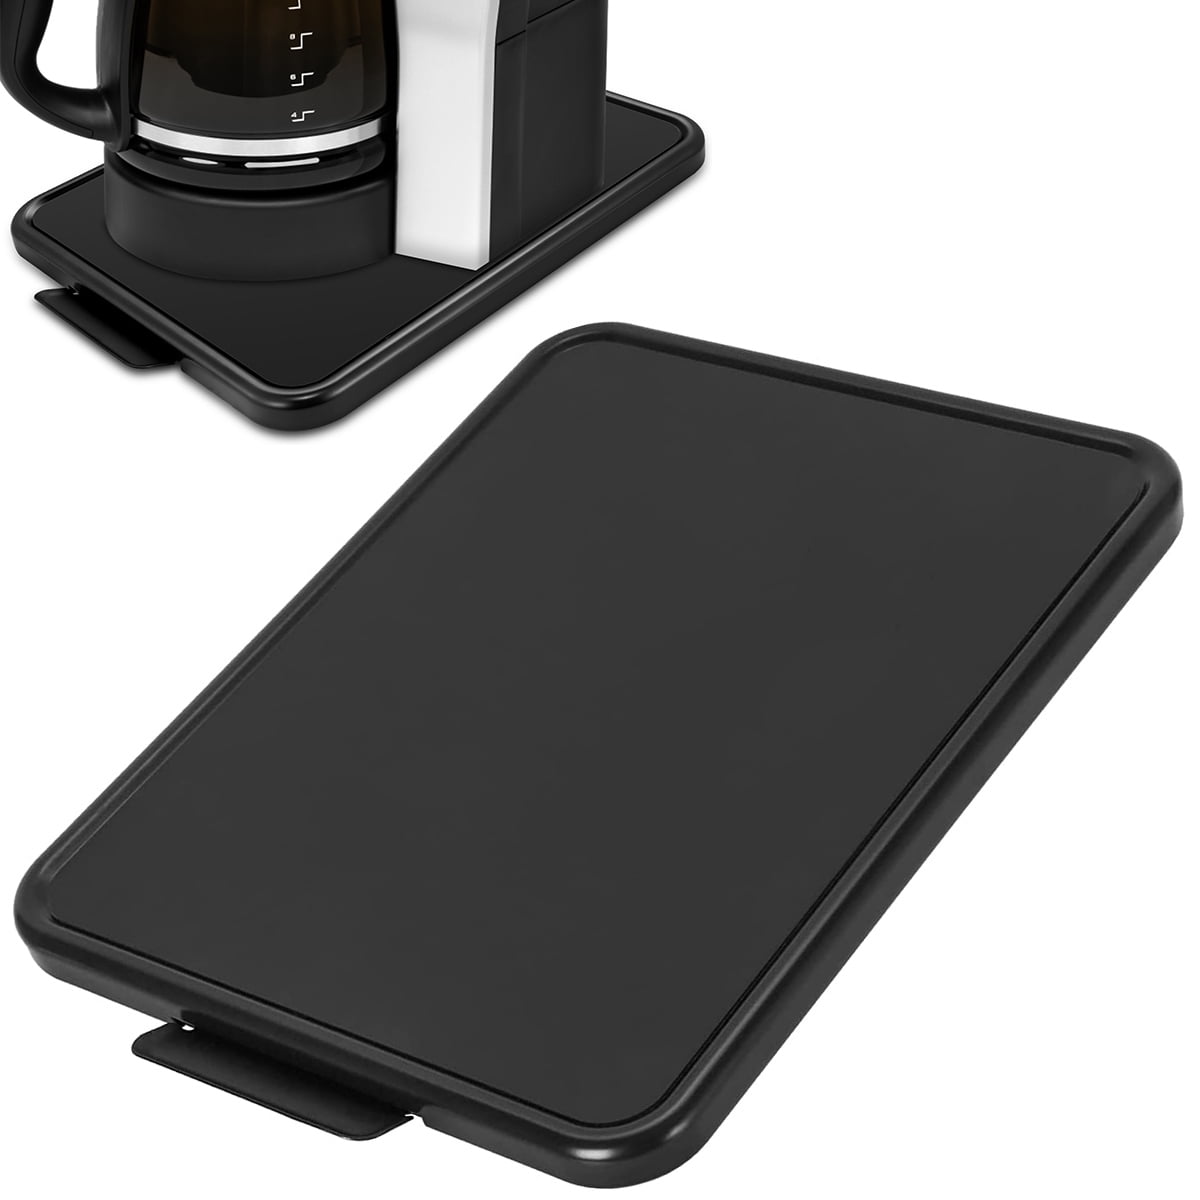 Large- Heavy Duty Kitchen Appliance Sliders for Kitchen Appliances|Swivels 360°-12x16|espresso Machine Slider tray|Sliding Tray for Kitchen